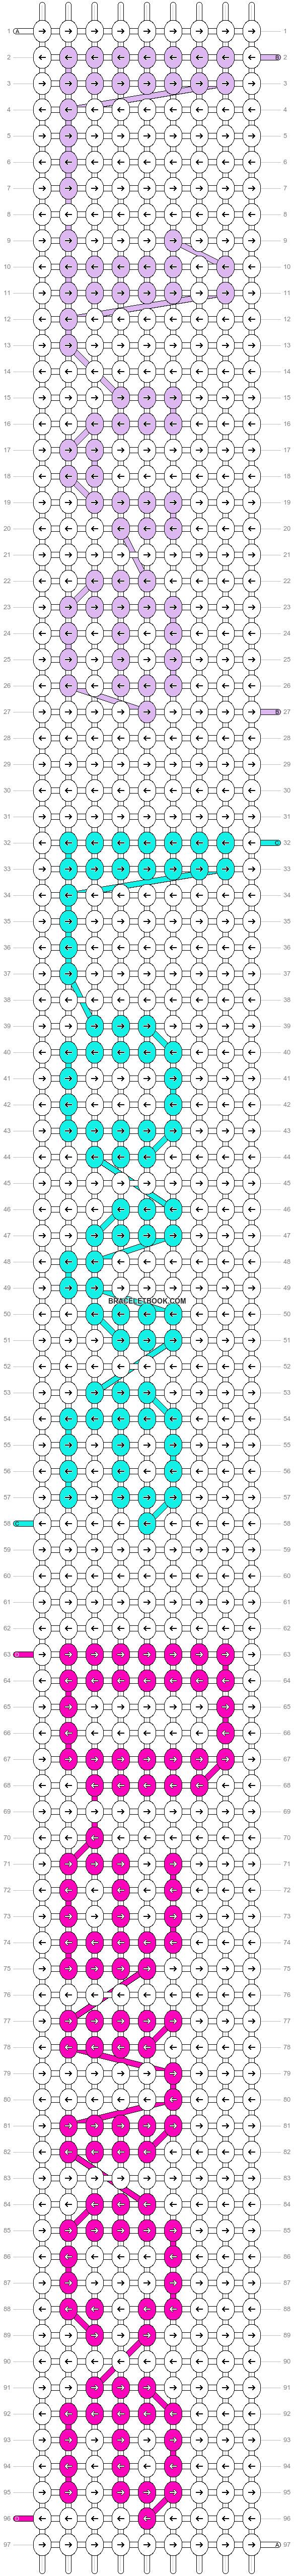 Alpha pattern #7243 variation #46569 pattern